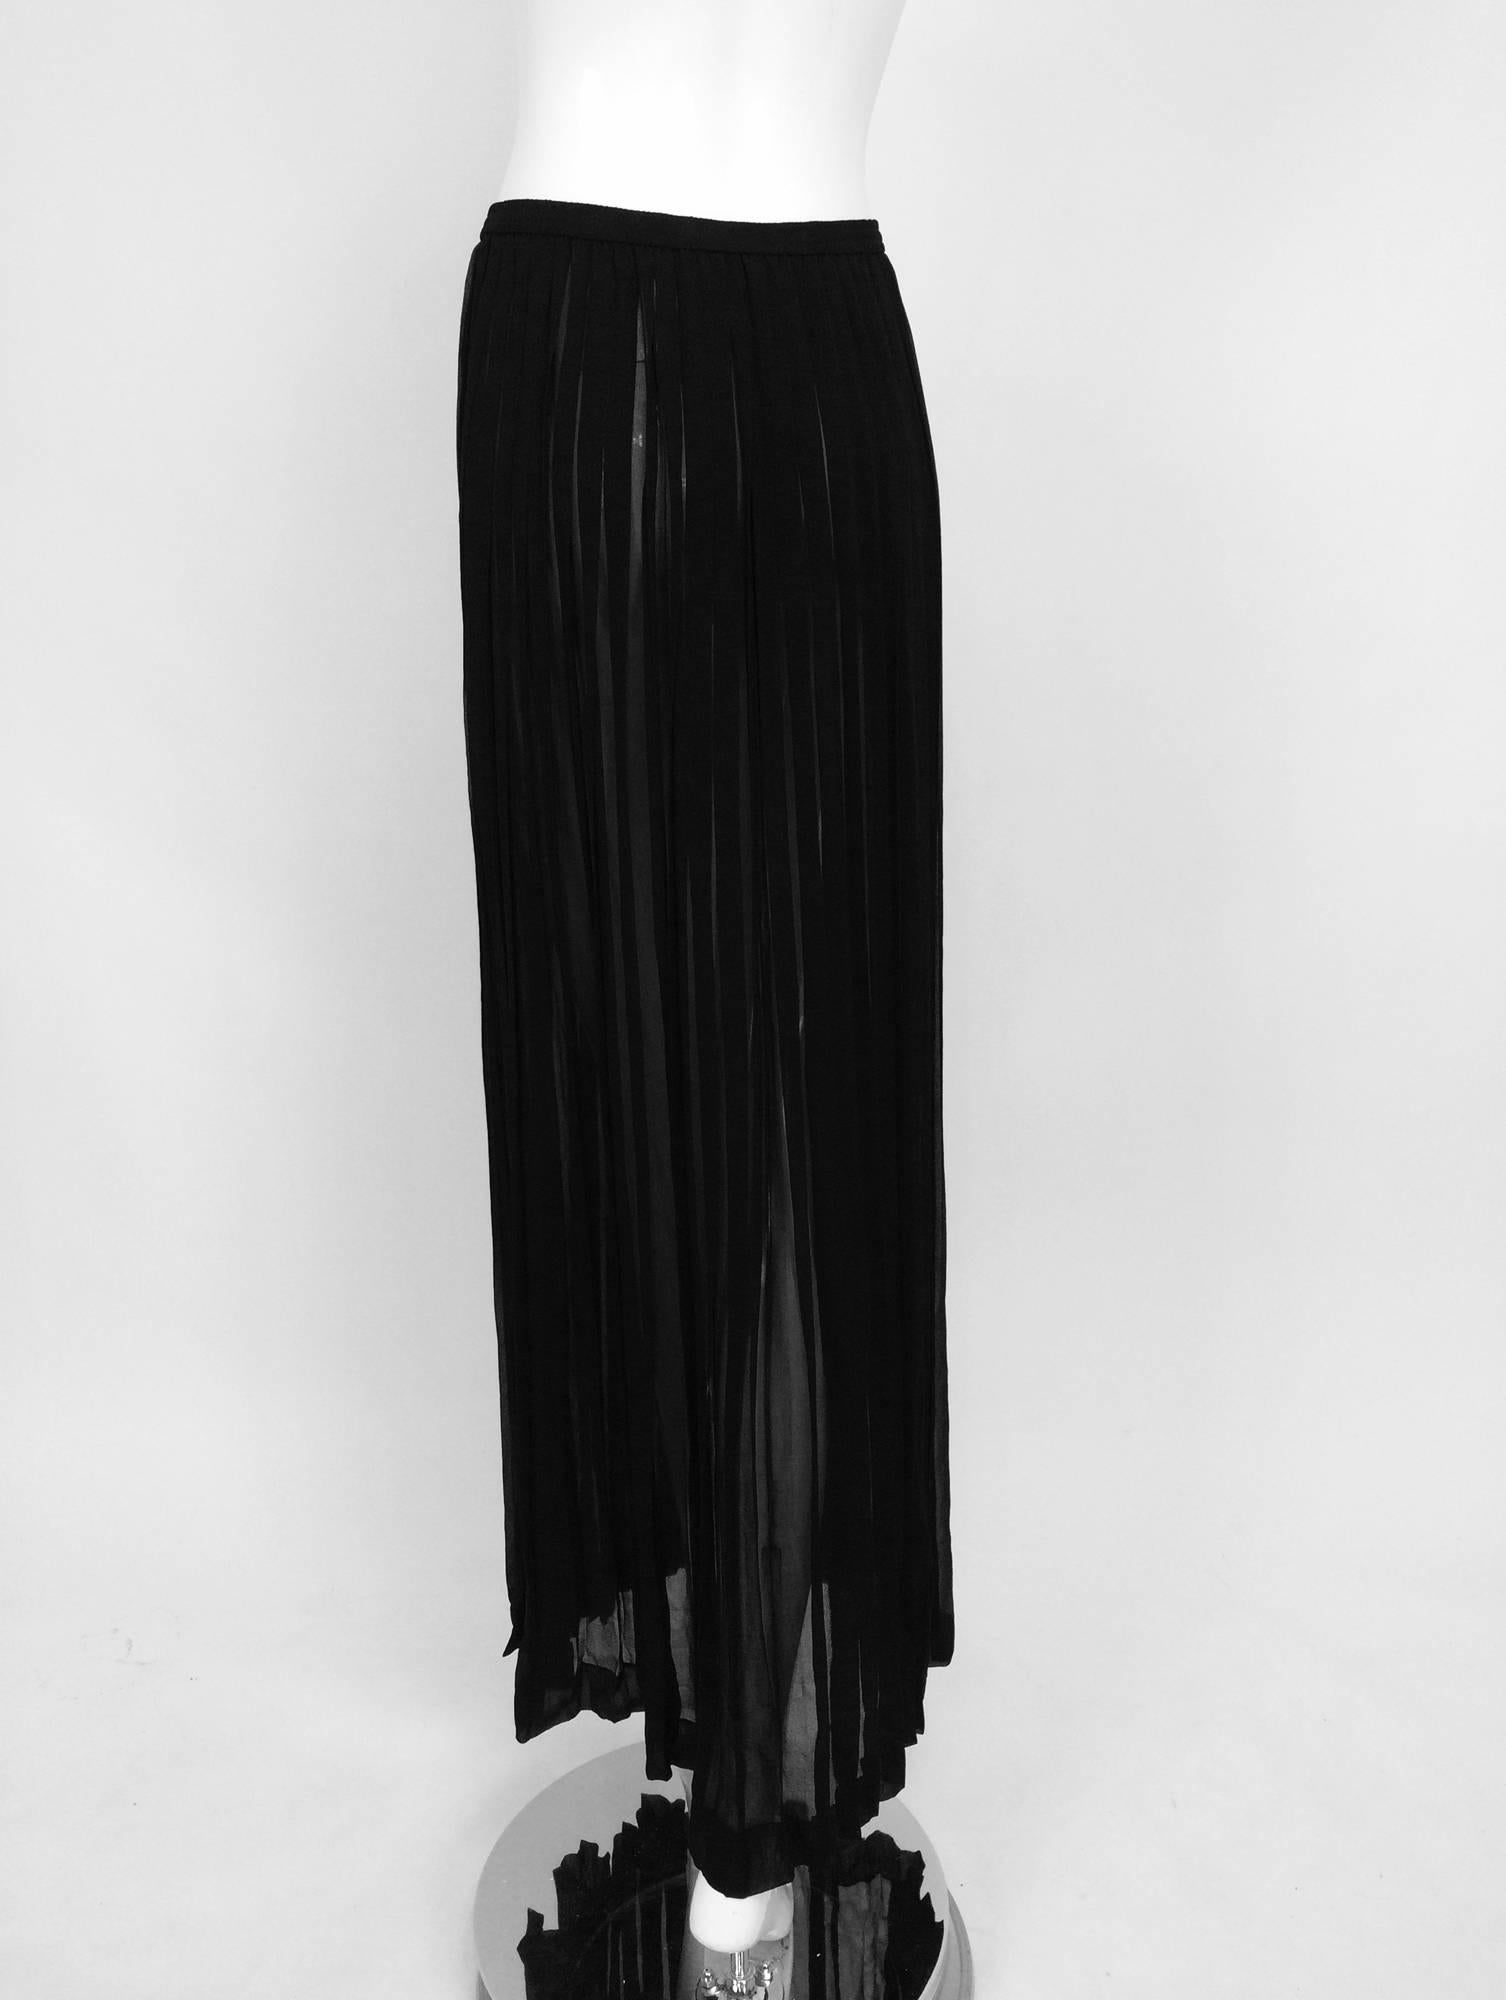 Yves Saint Laurent Black Silk Chiffon Knife Pleated Maxi Skirt Vintage 1970s 2